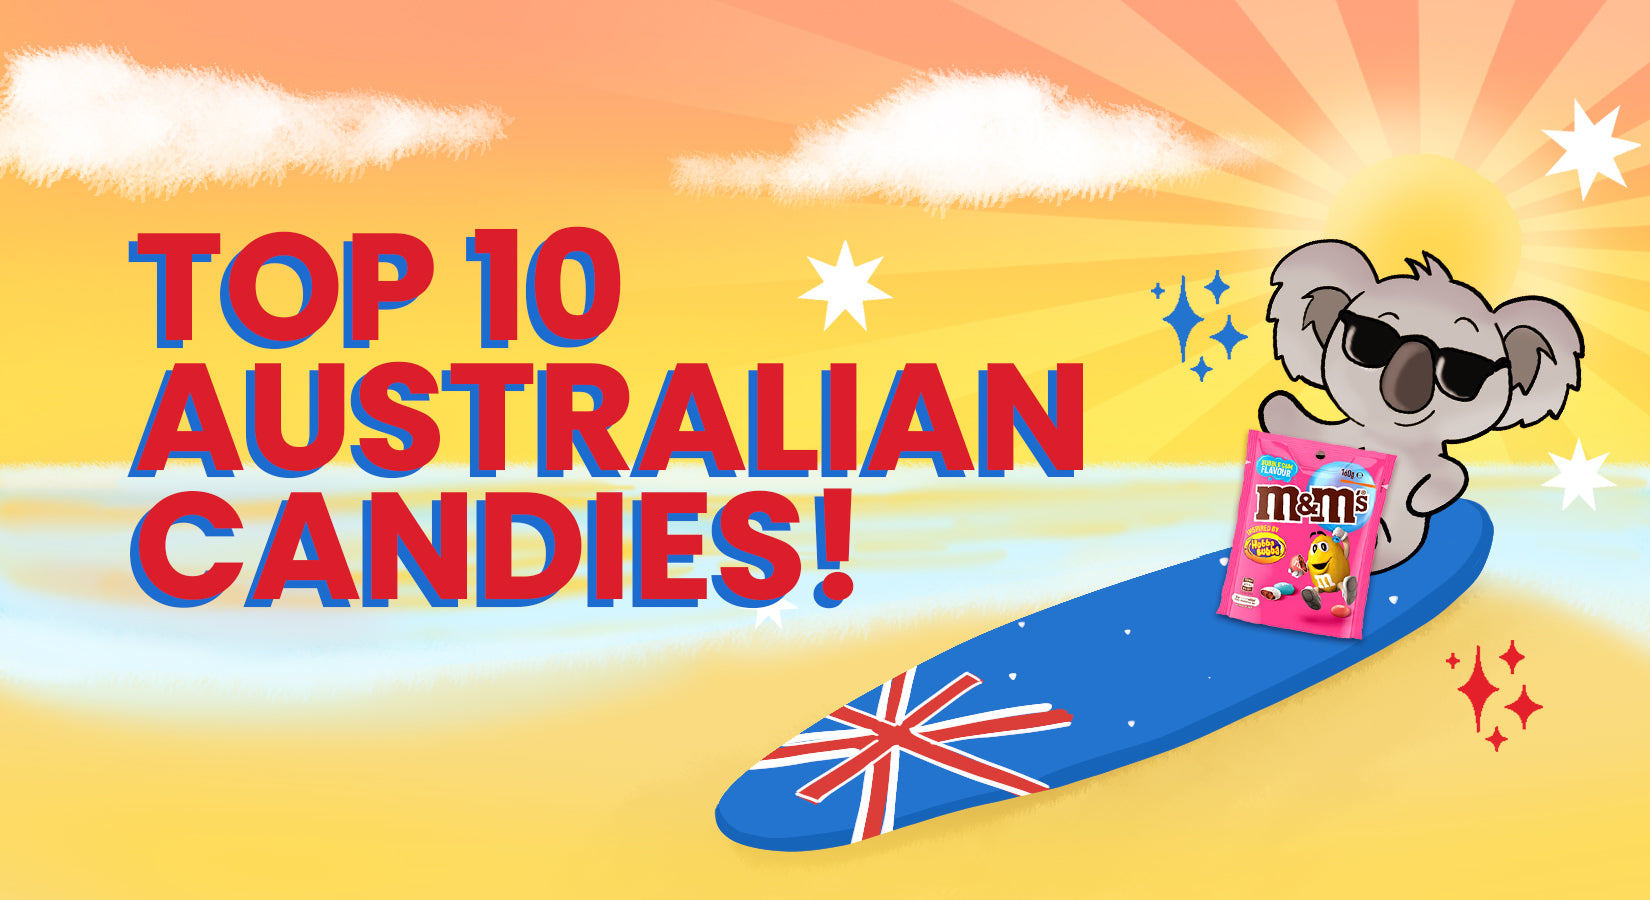 The Top 10 Australian Candies